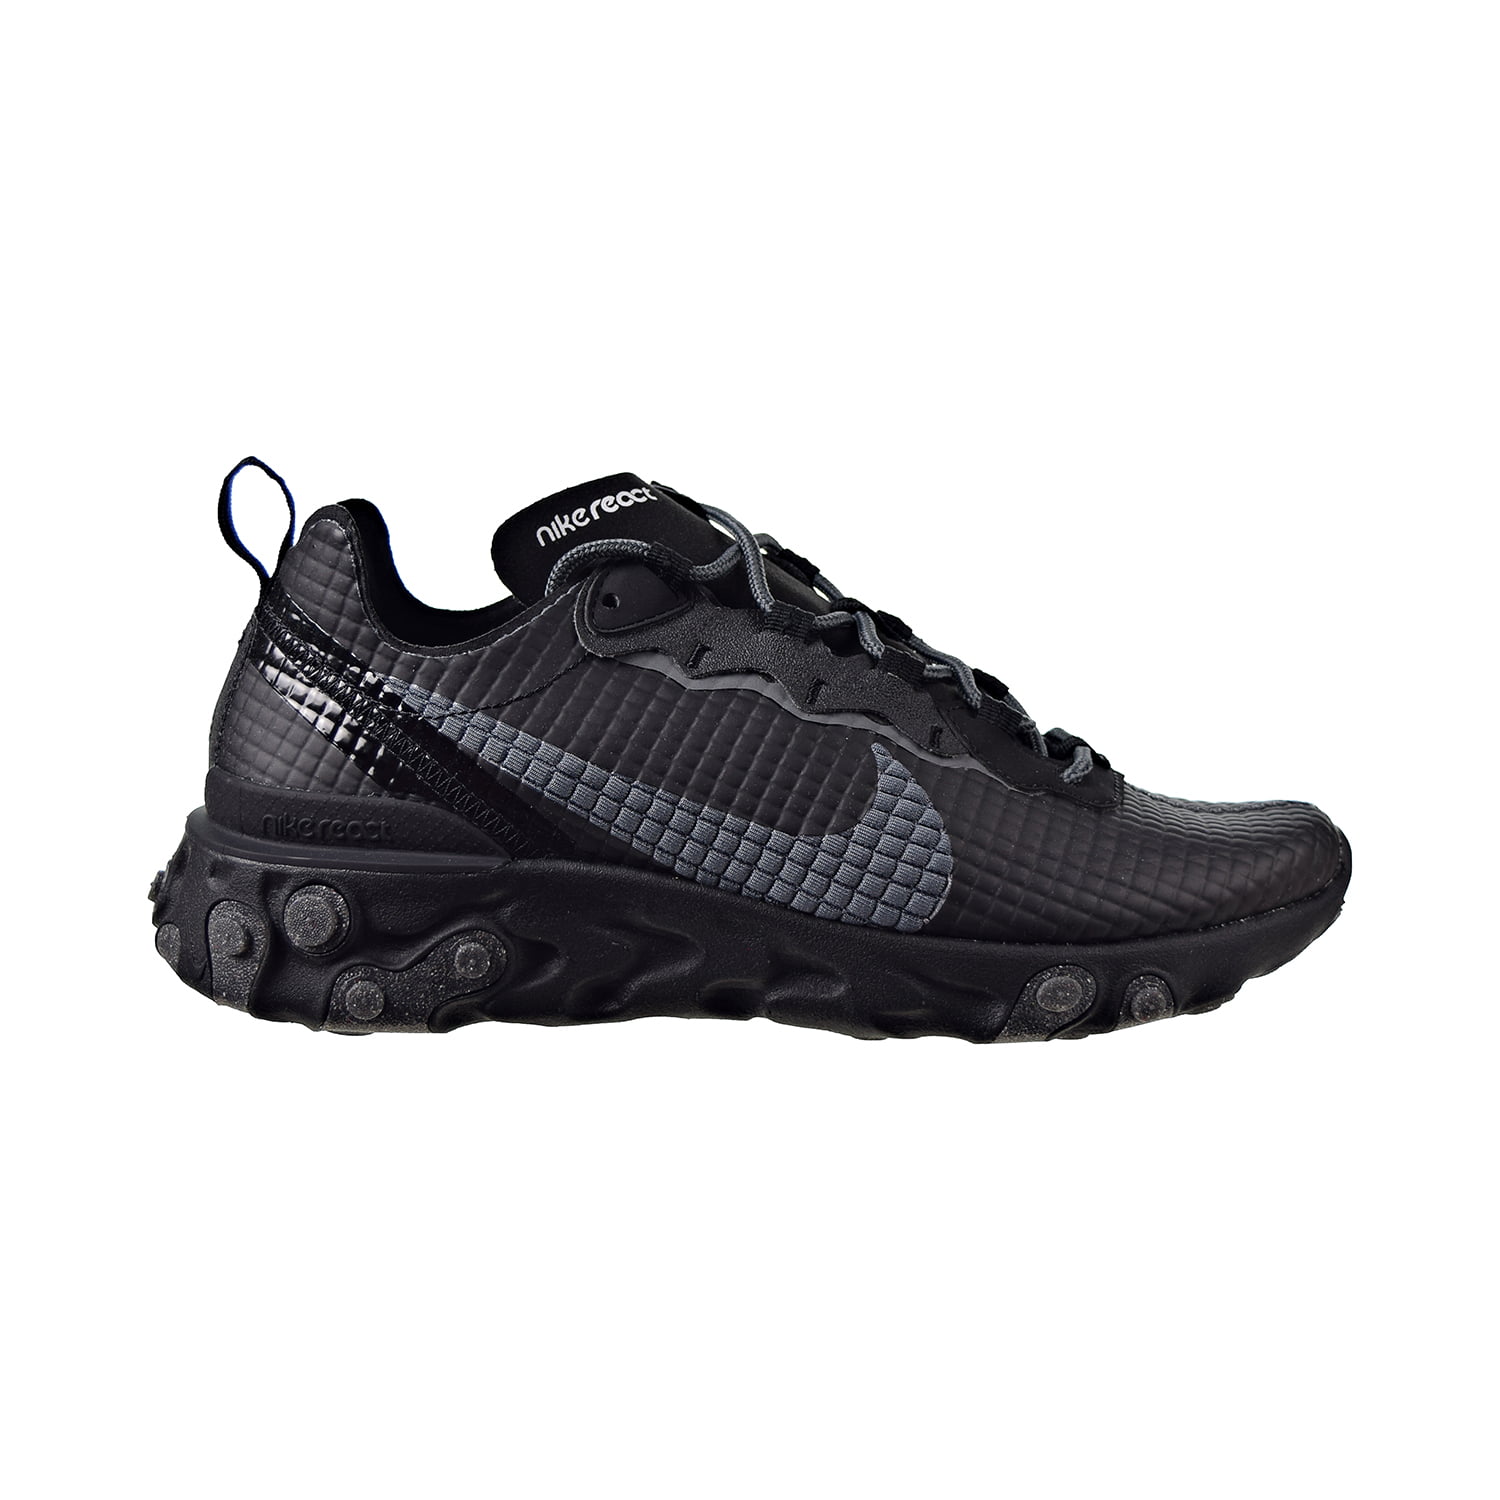 Schat Stijgen vogel Nike React Element 55 PRM Men's Shoes Black-Dark Grey-Anthracite ci3835-002  - Walmart.com